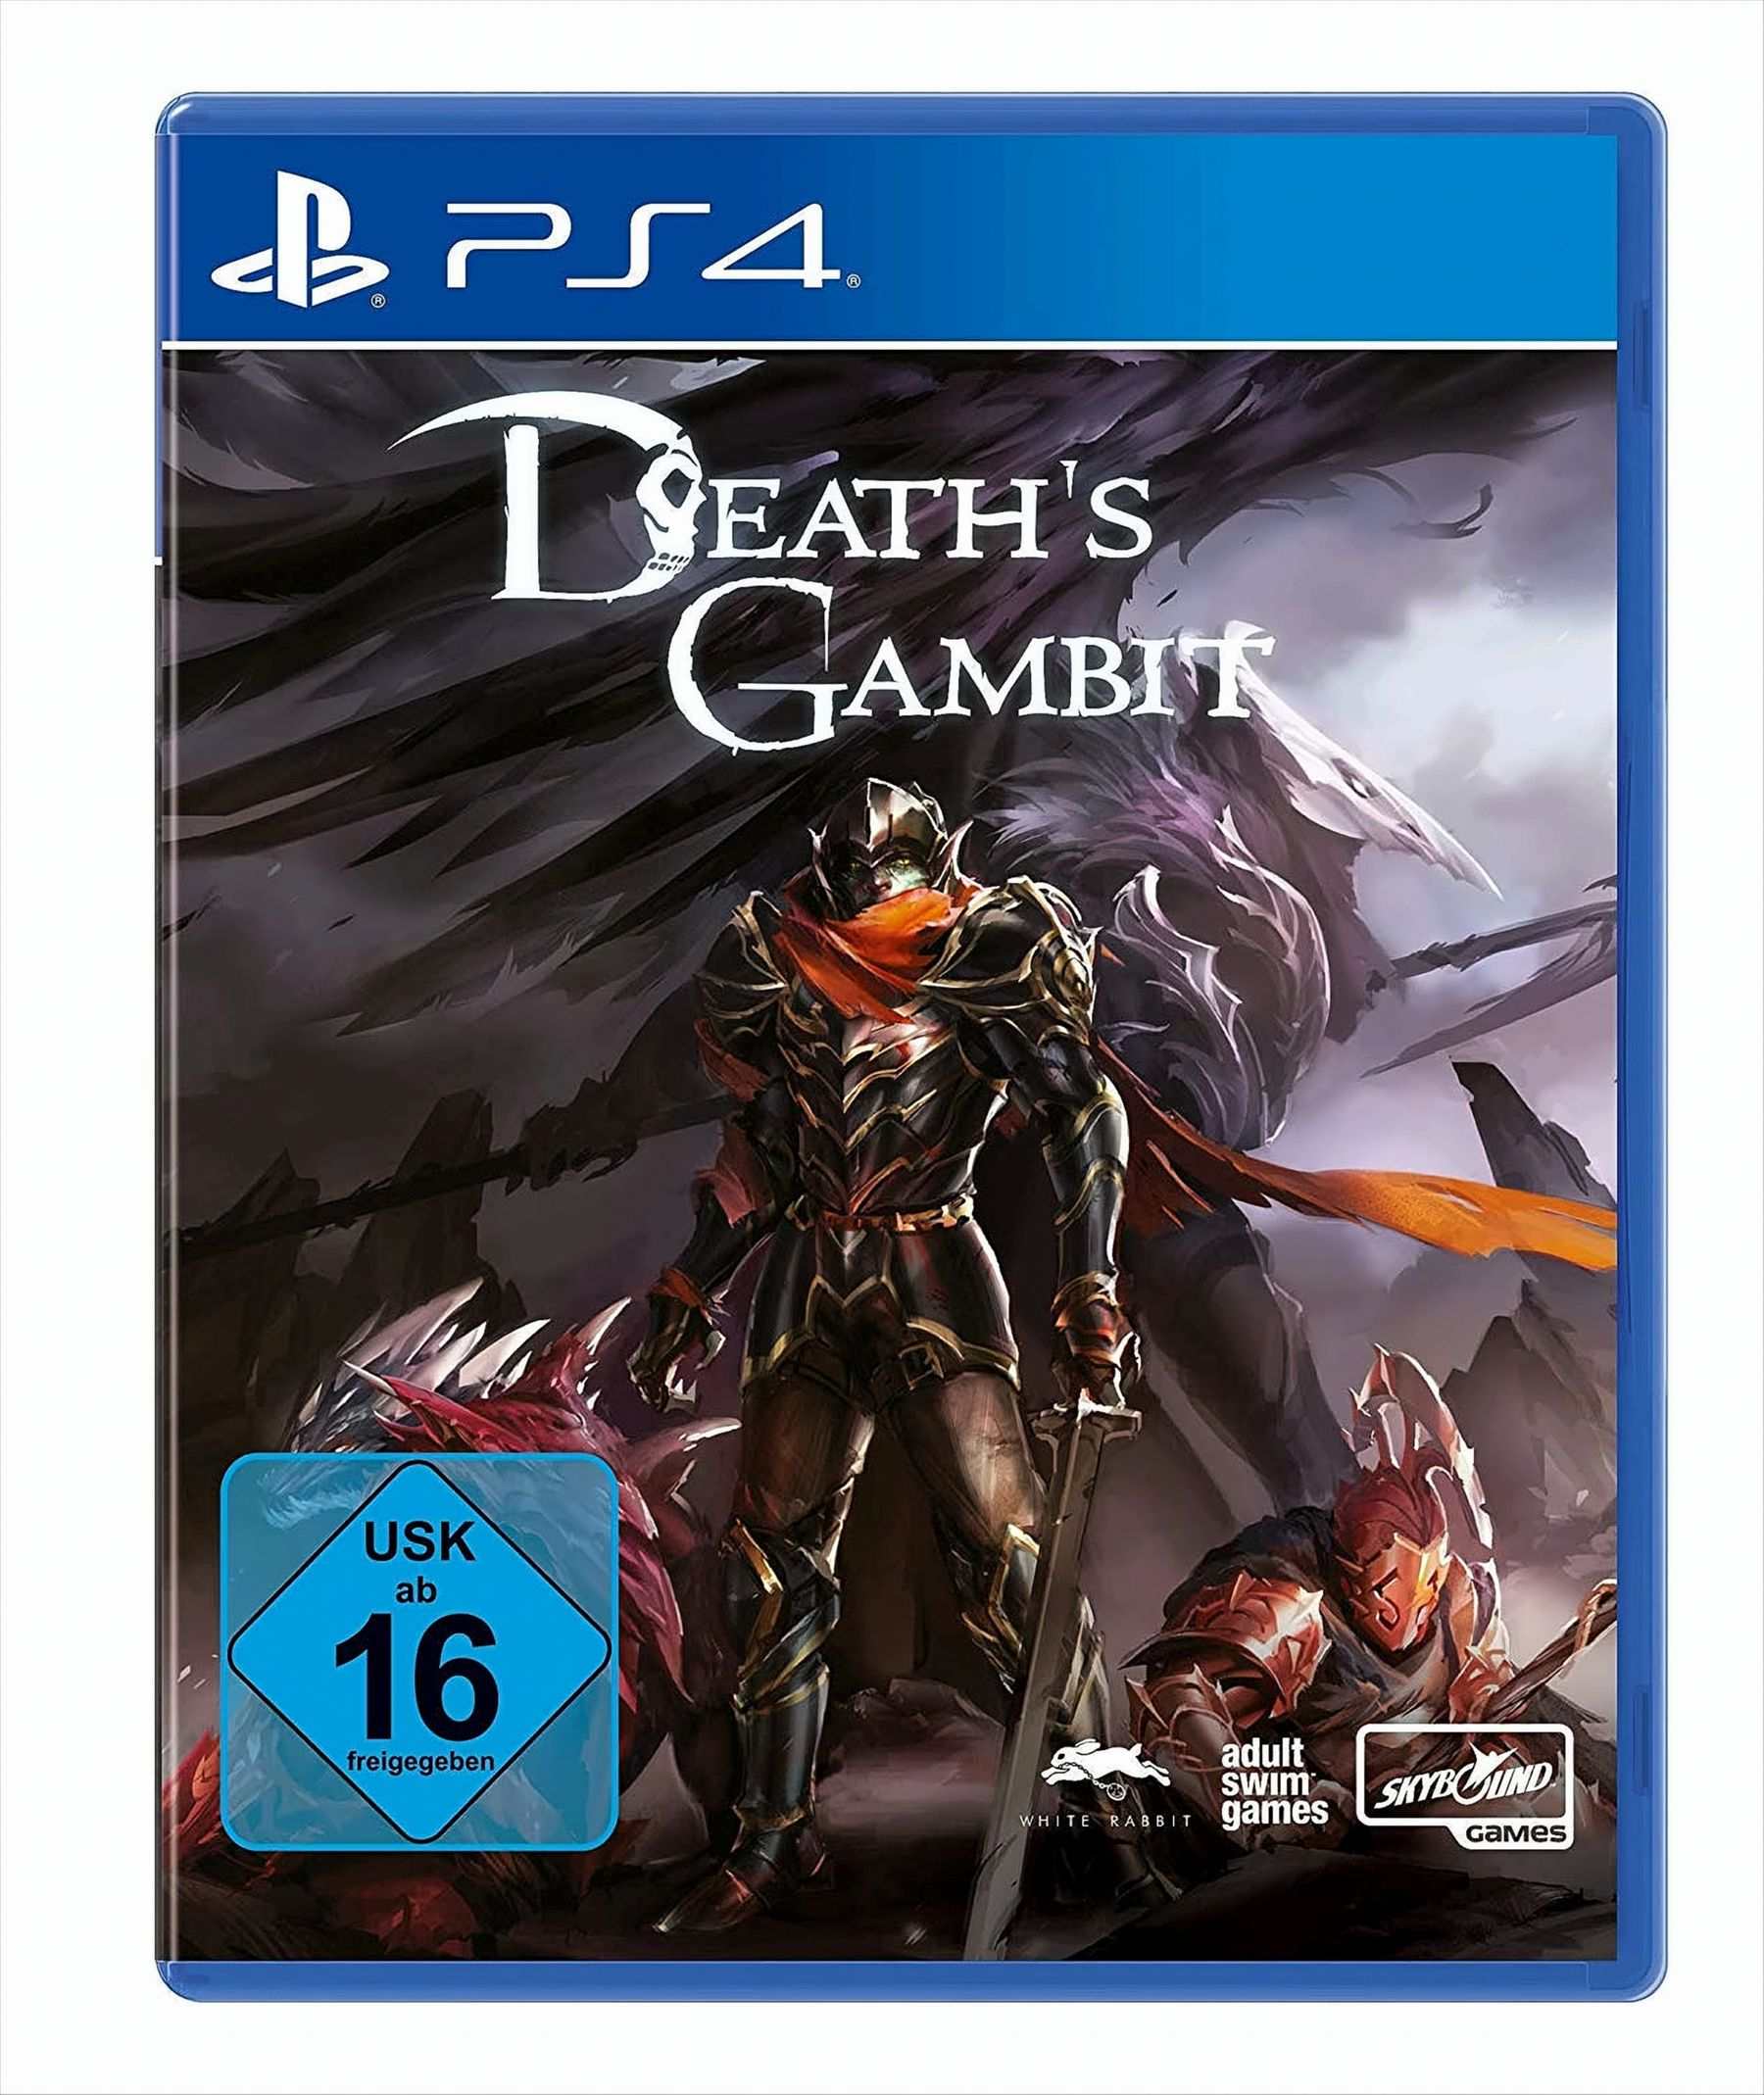 PS-4 Gambit 4] - Death [PlayStation